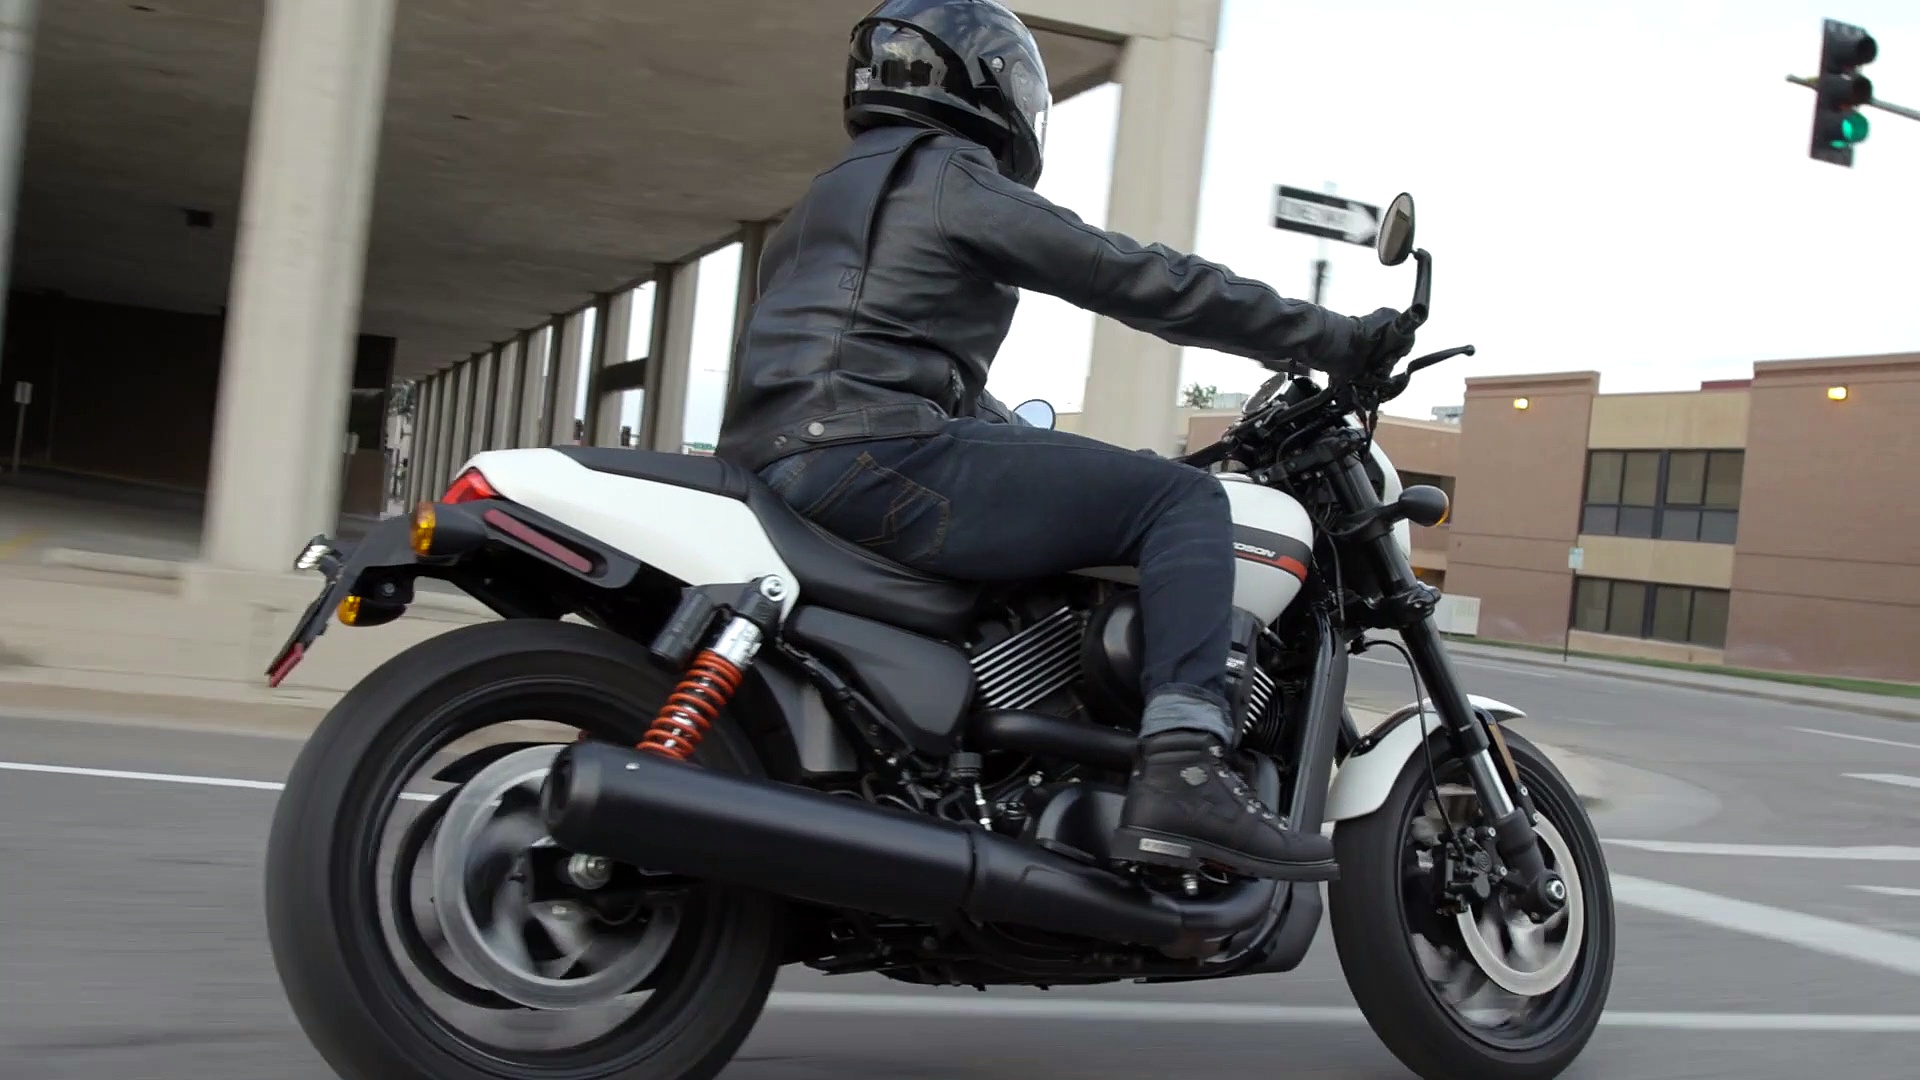 Best New Motorcycles Under $8K